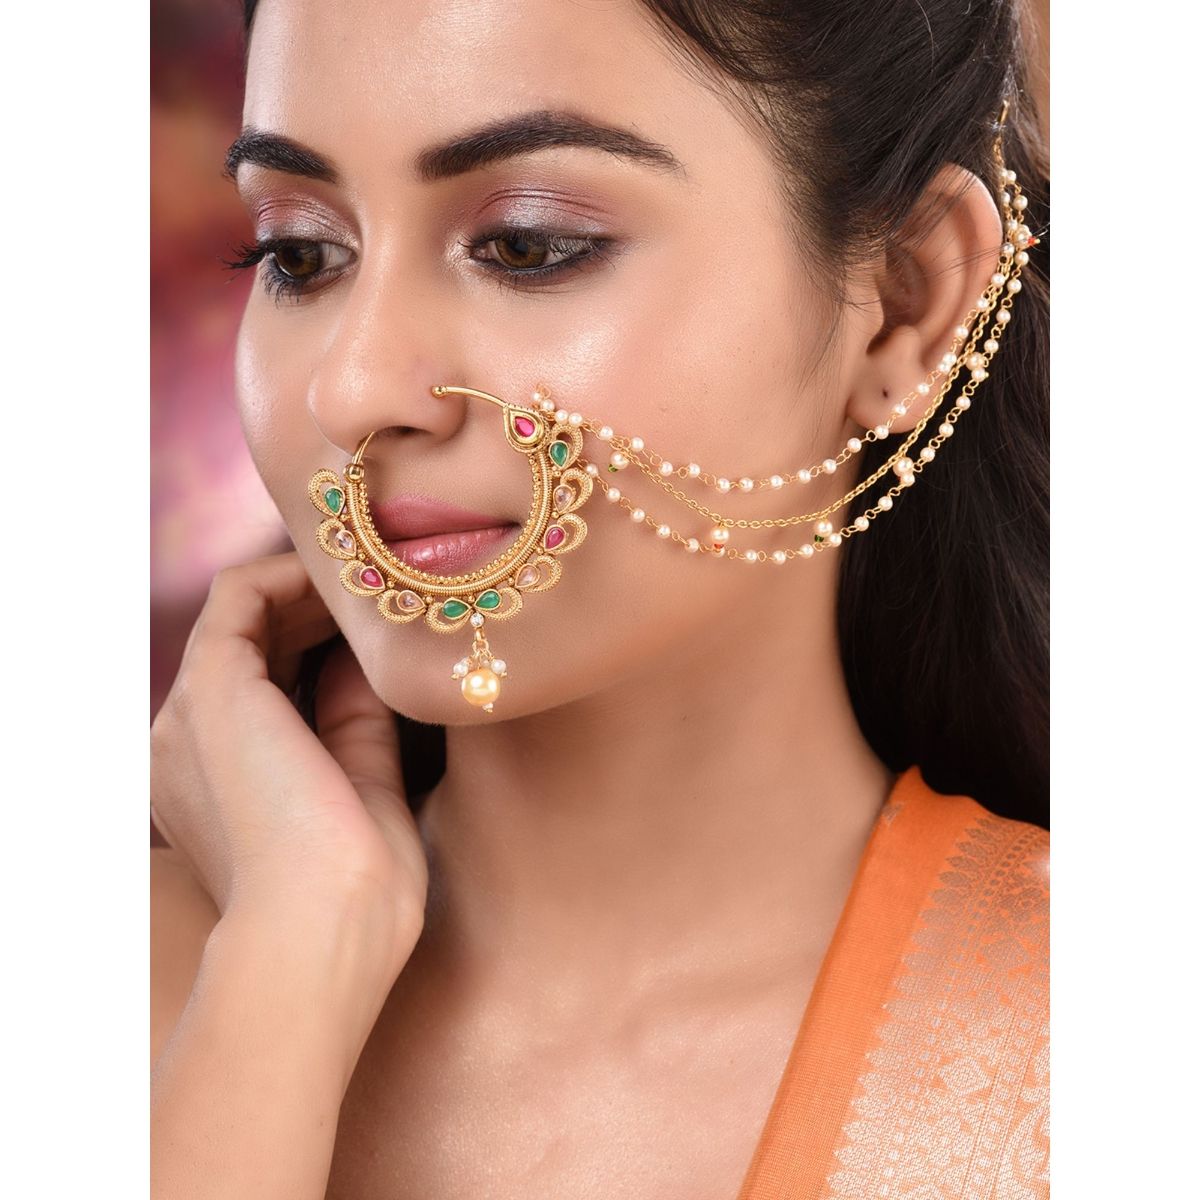 Buy Indian Nose Ring, Nose Ring Indian, Gold Nose Ring, Nose Ring Gold,  Indian Nose Hoop, Nose Hoop Indian, Indian Nose Ring Gold 14k, SKU 4591  Online in India - Etsy